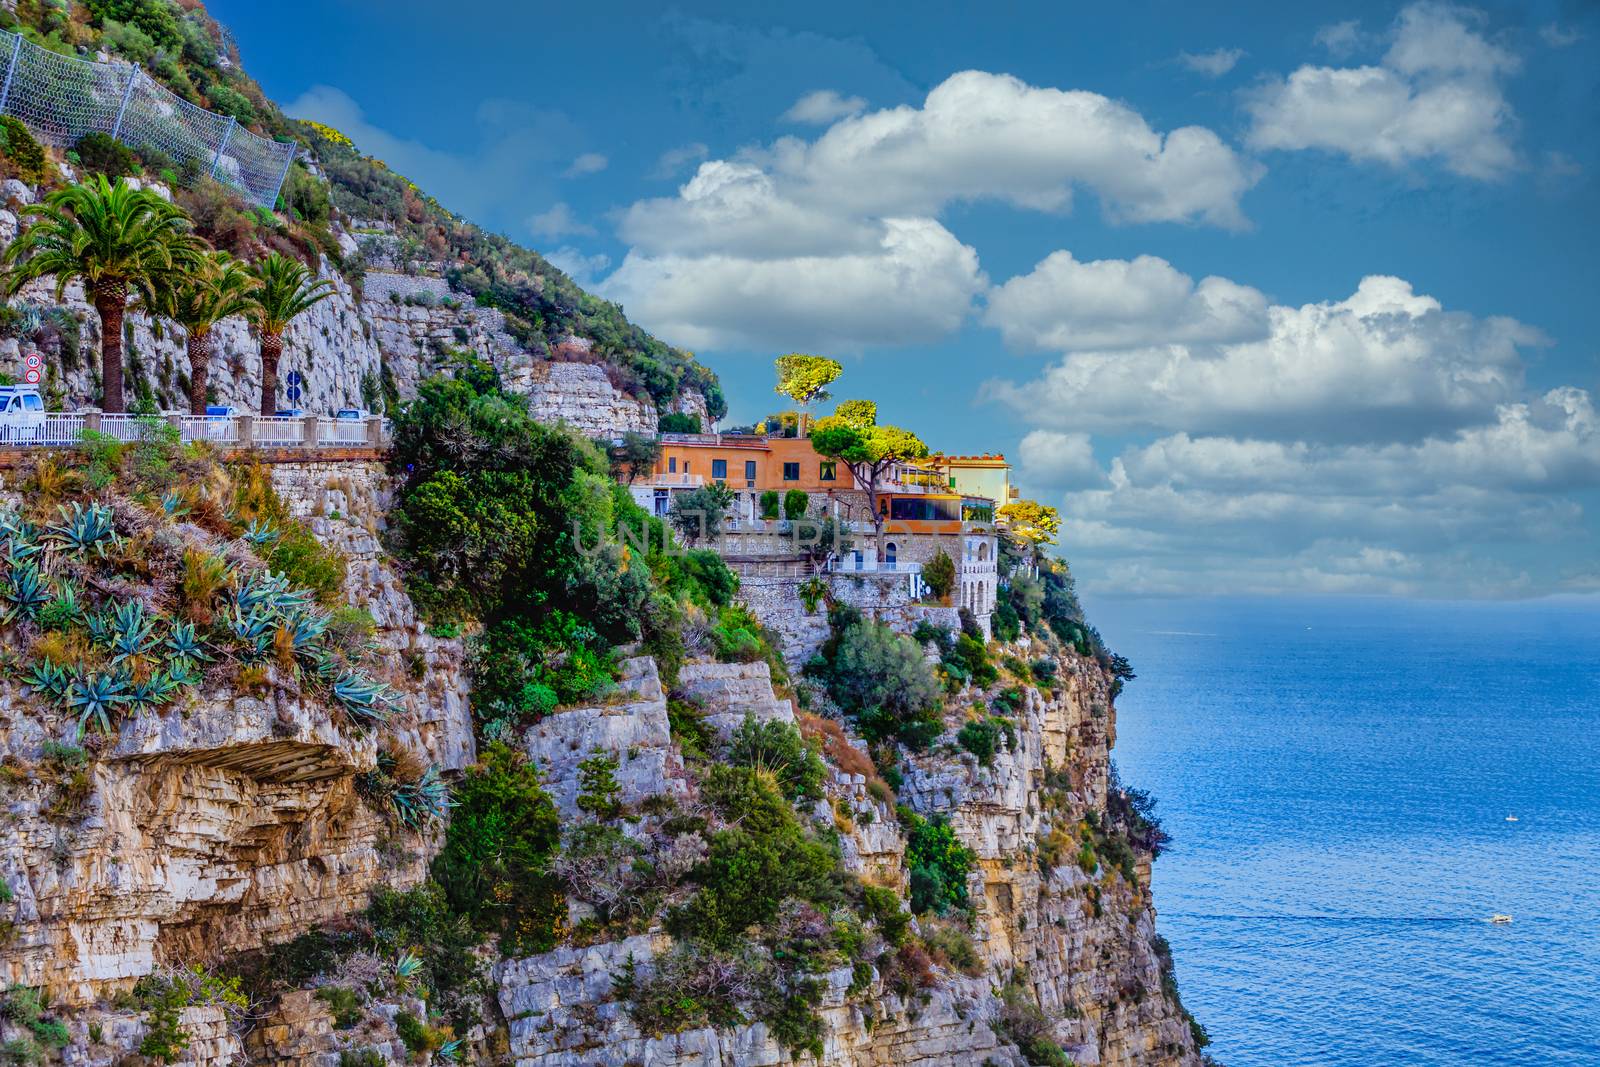 Views along the Salerno Coast of Italy